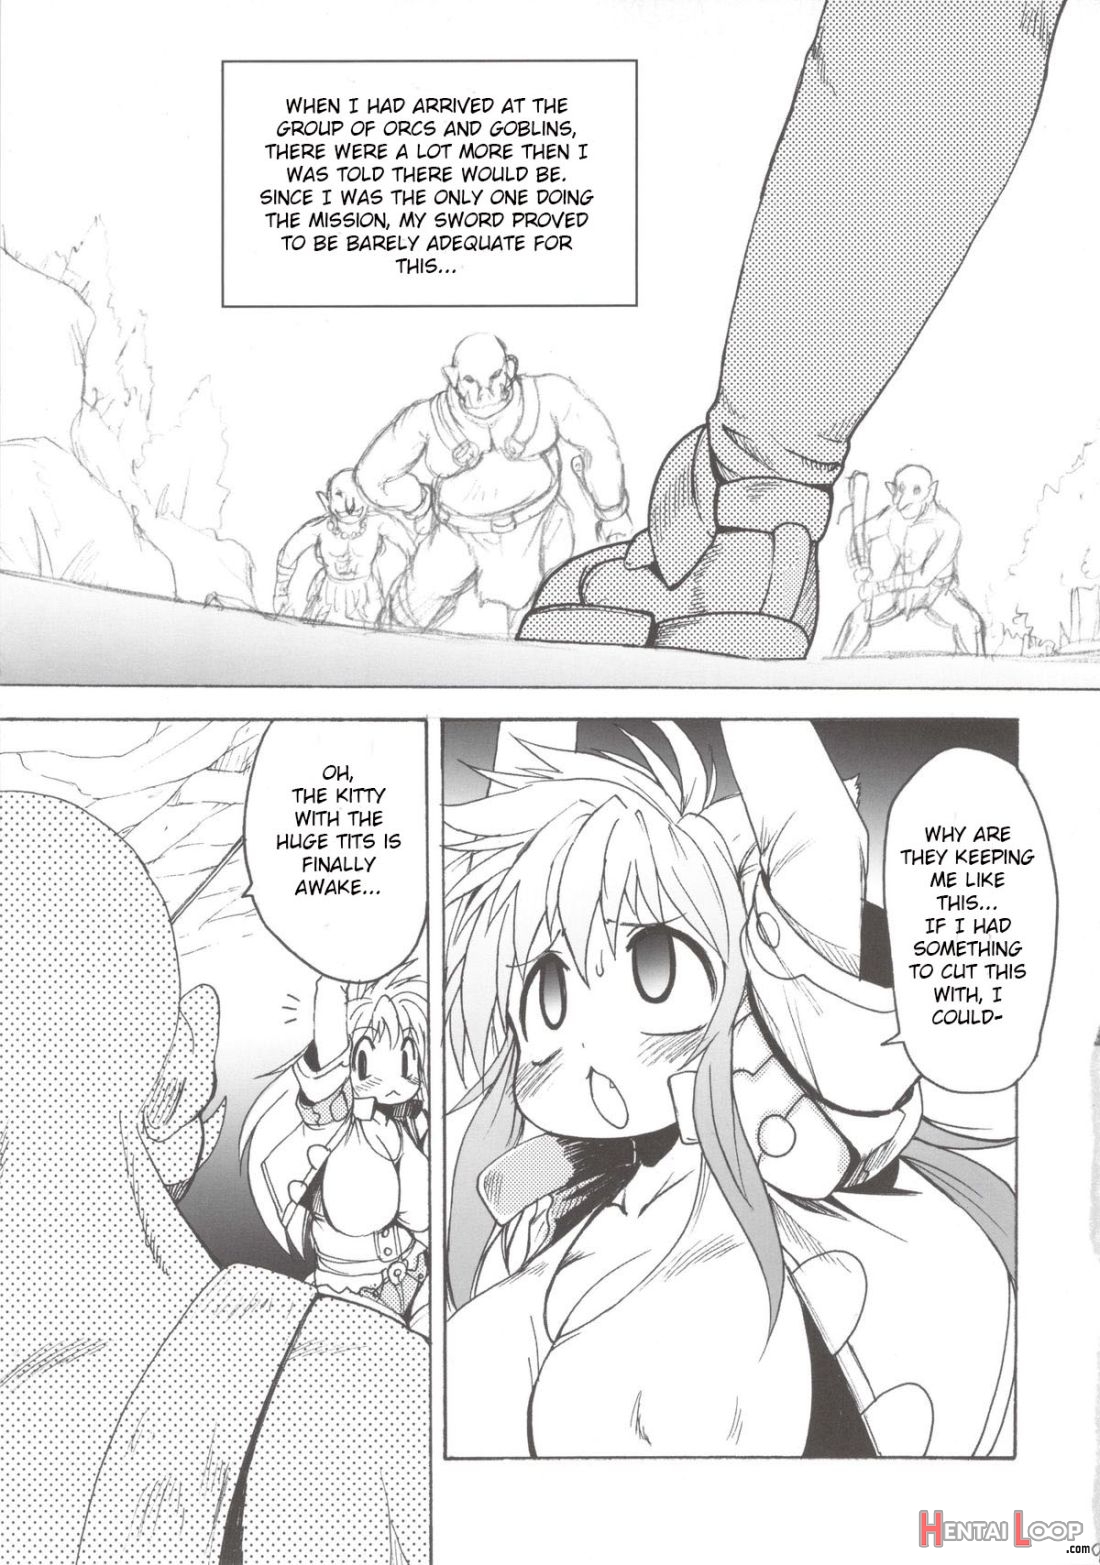 Nyan Sword page 5